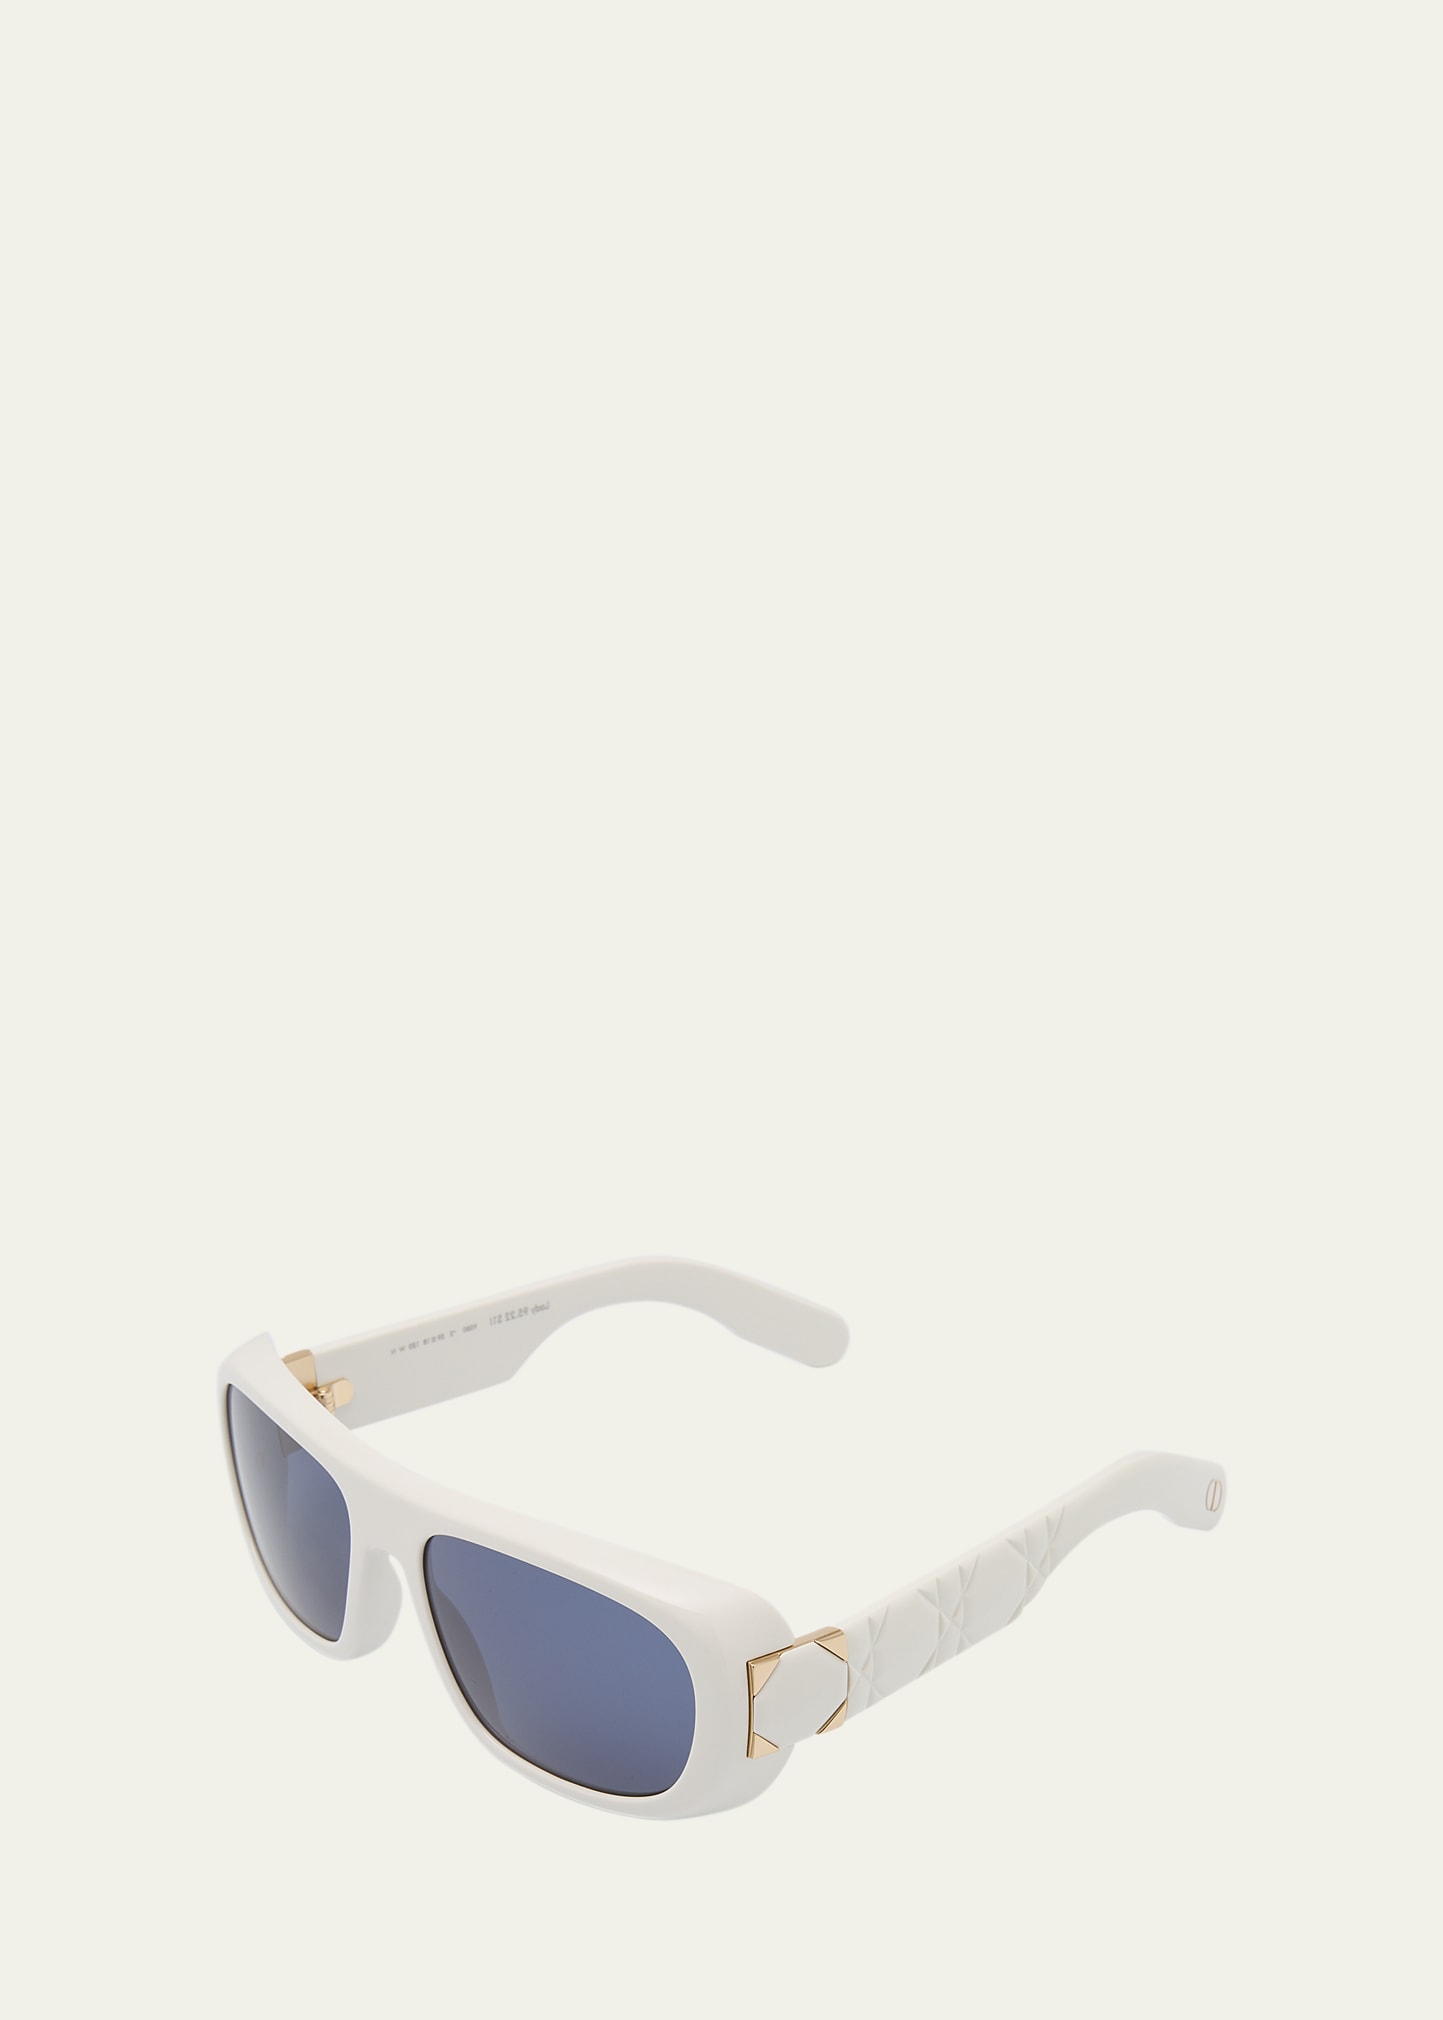 DIOR Lady 9522 R1I 51 Grey & White Sunglasses